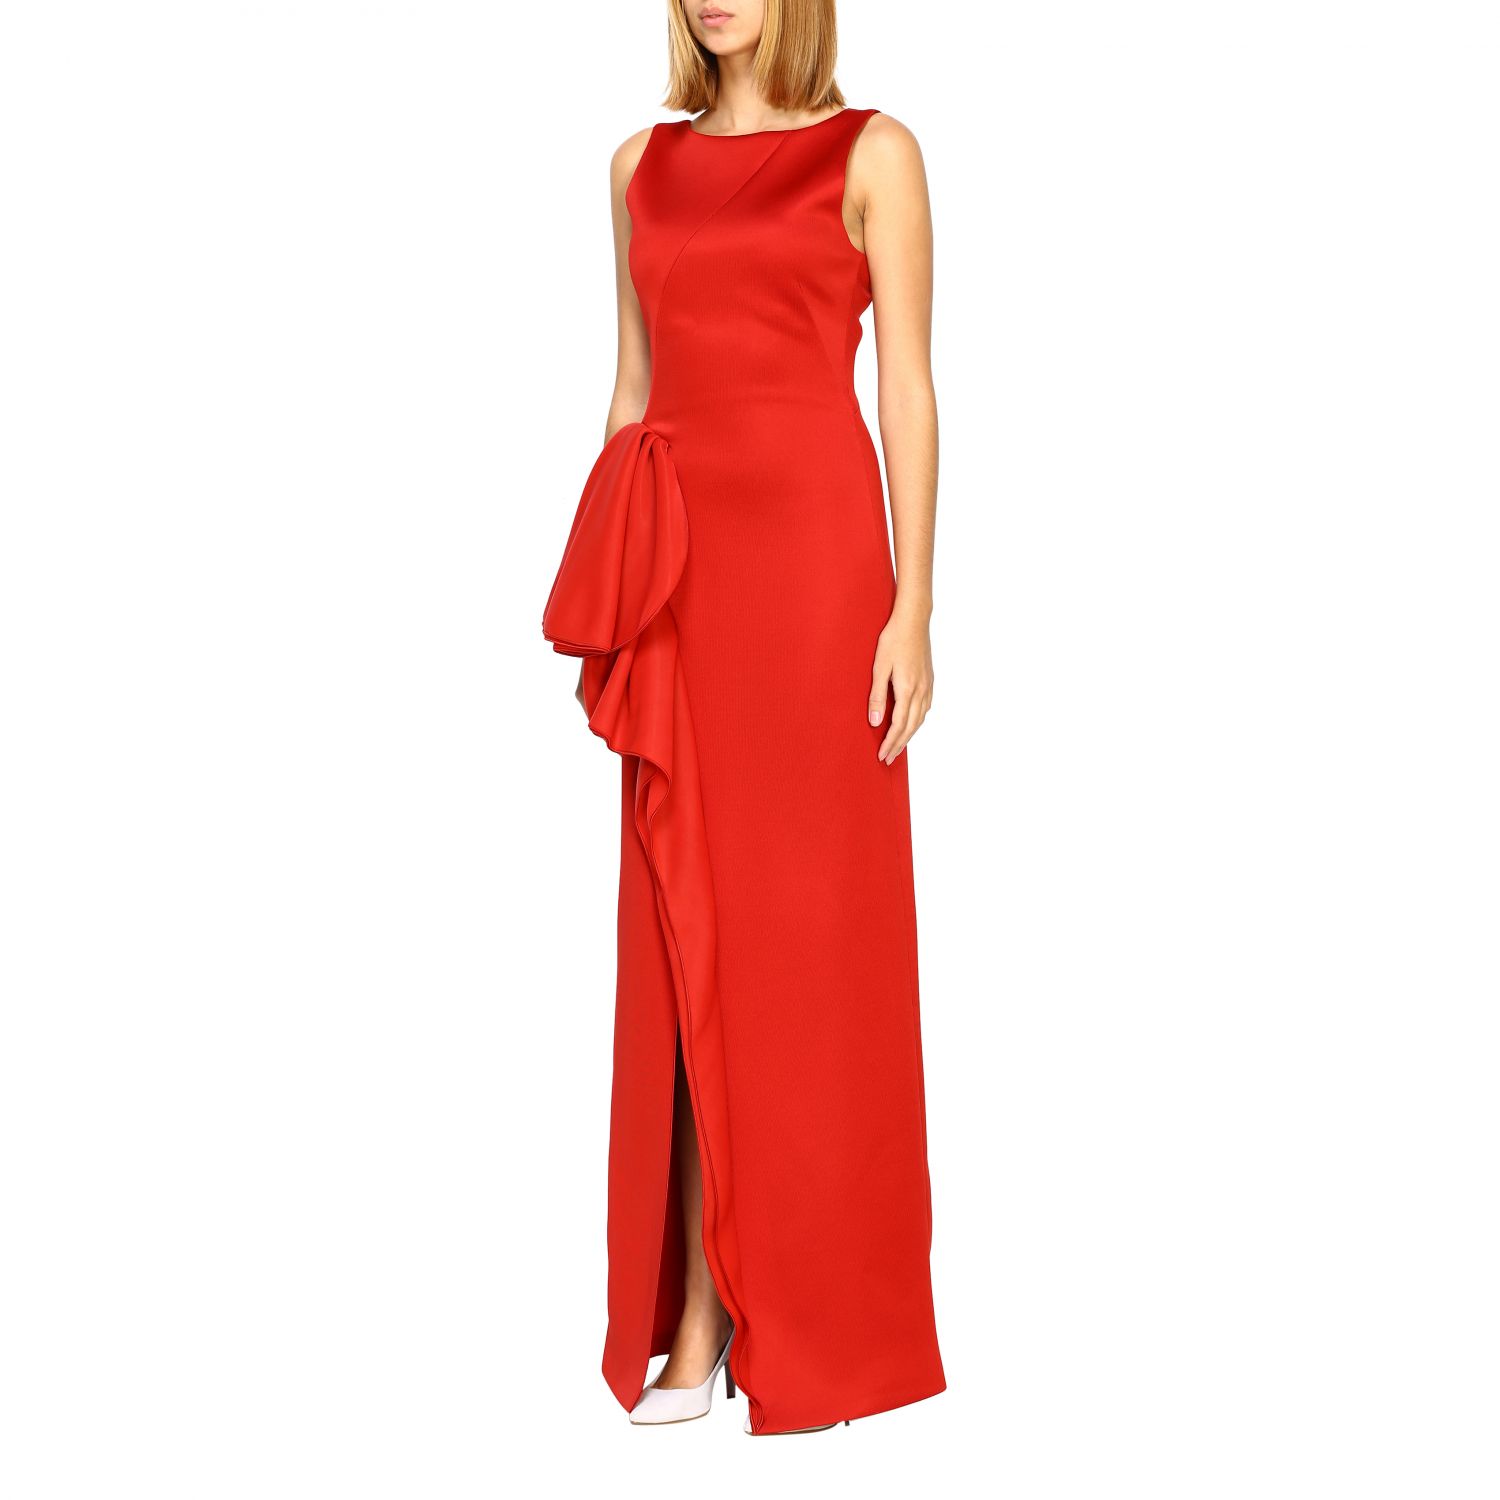 Emporio Armani Outlet: dress for woman - Red | Emporio Armani dress ...